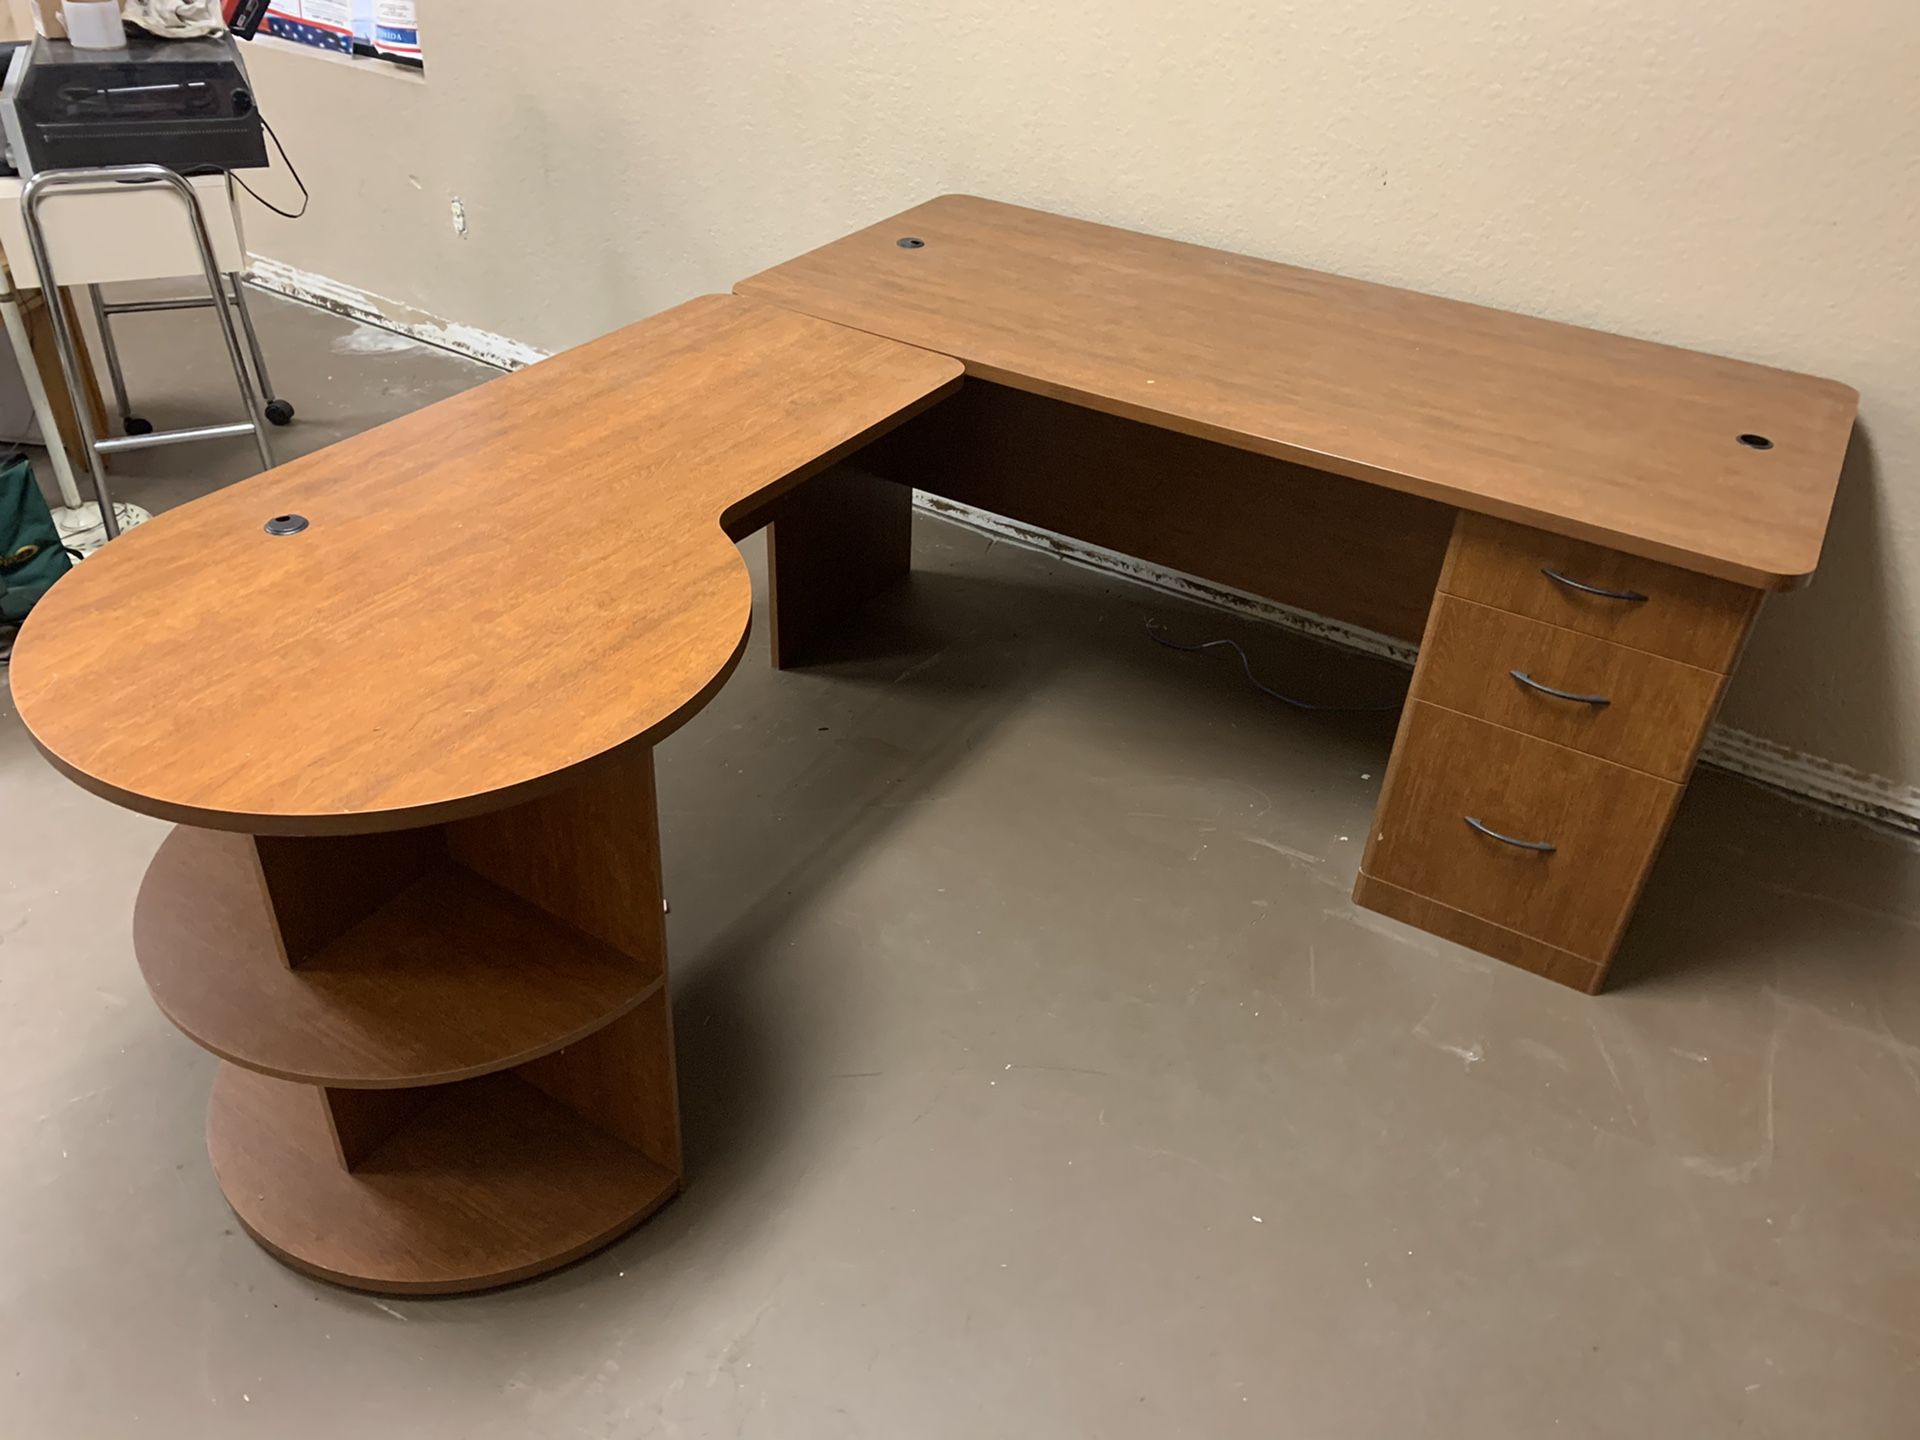 Free L shaped desk